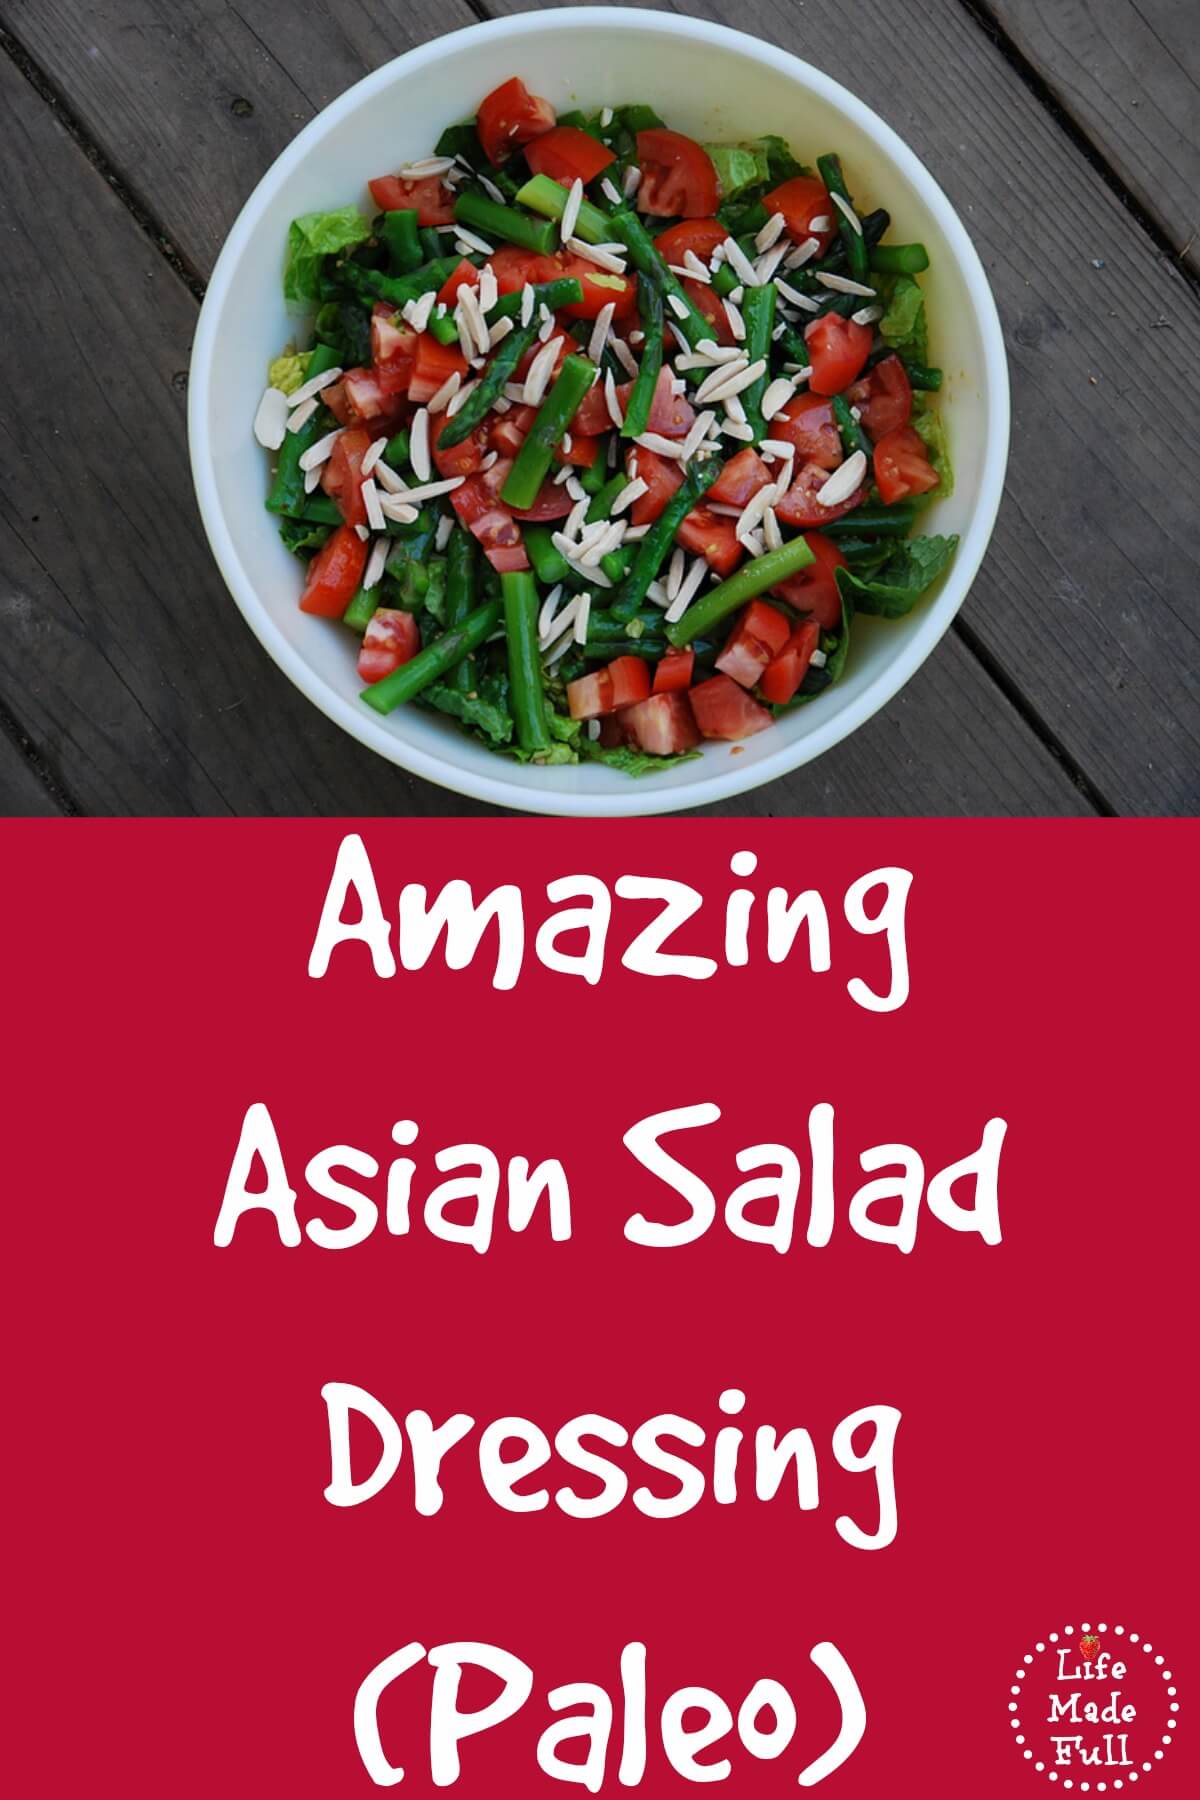 AMAZING Asian Salad Dressing